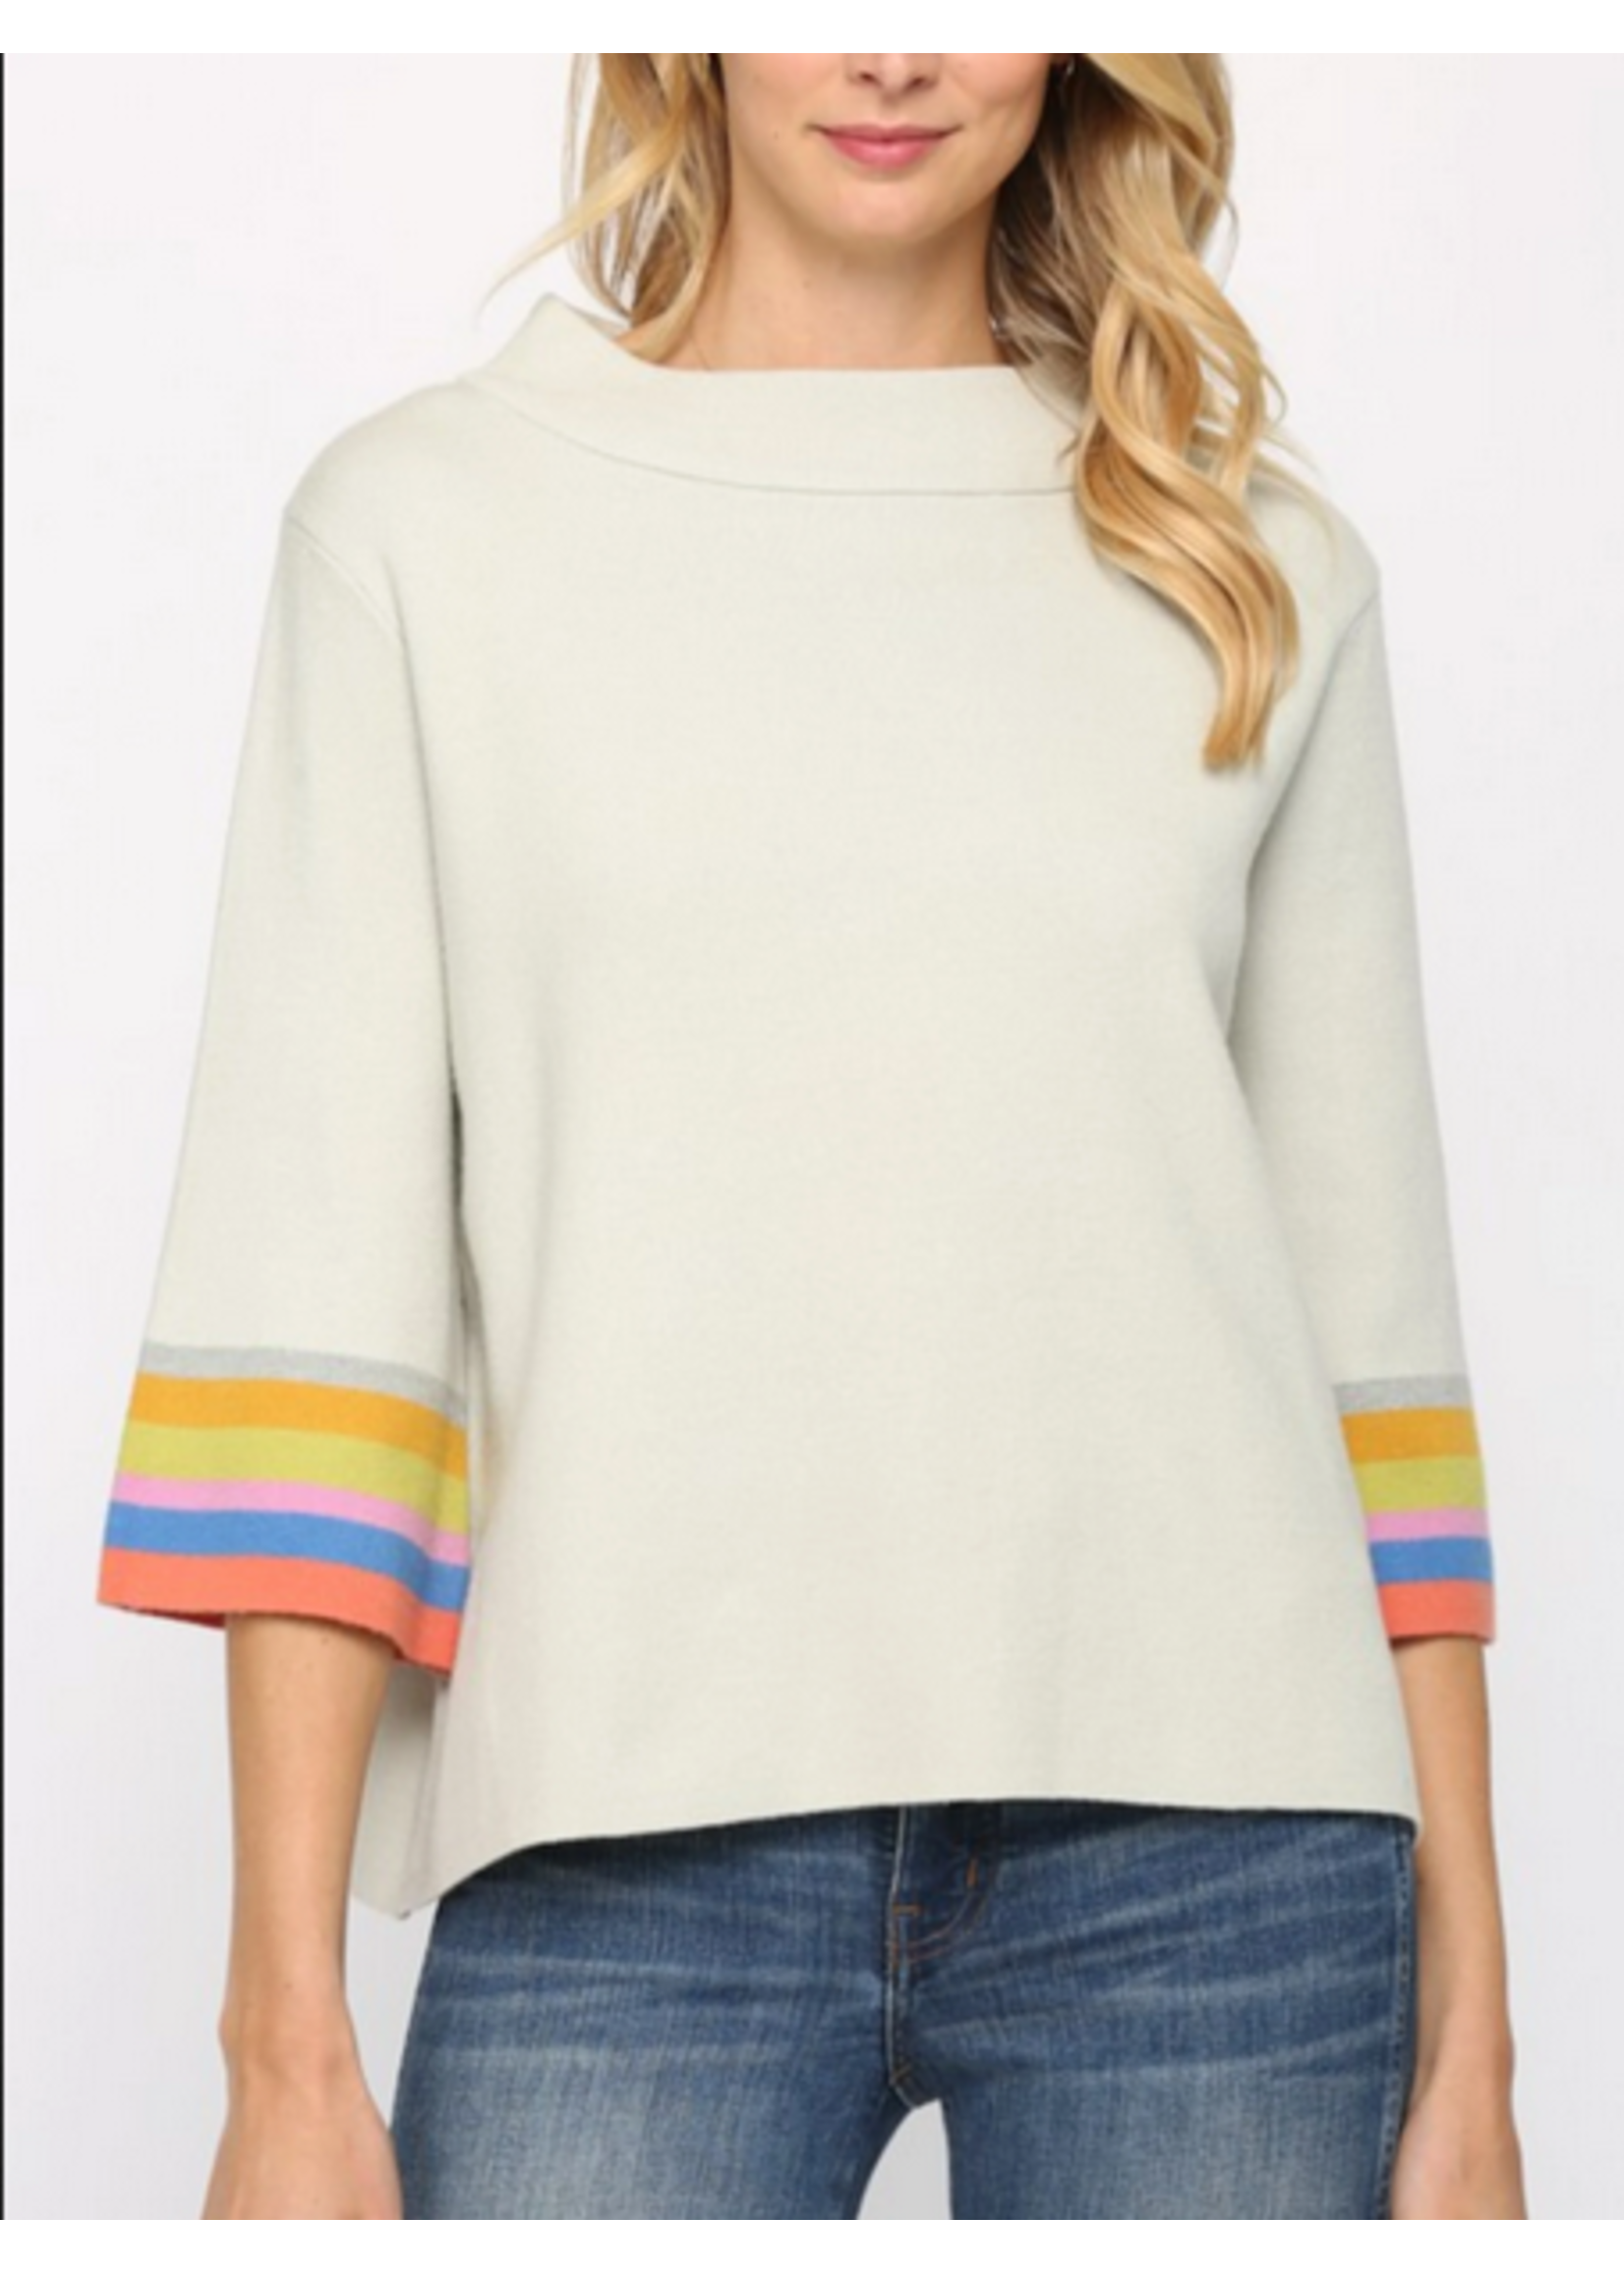 Fate Silver Rainbow Sweater